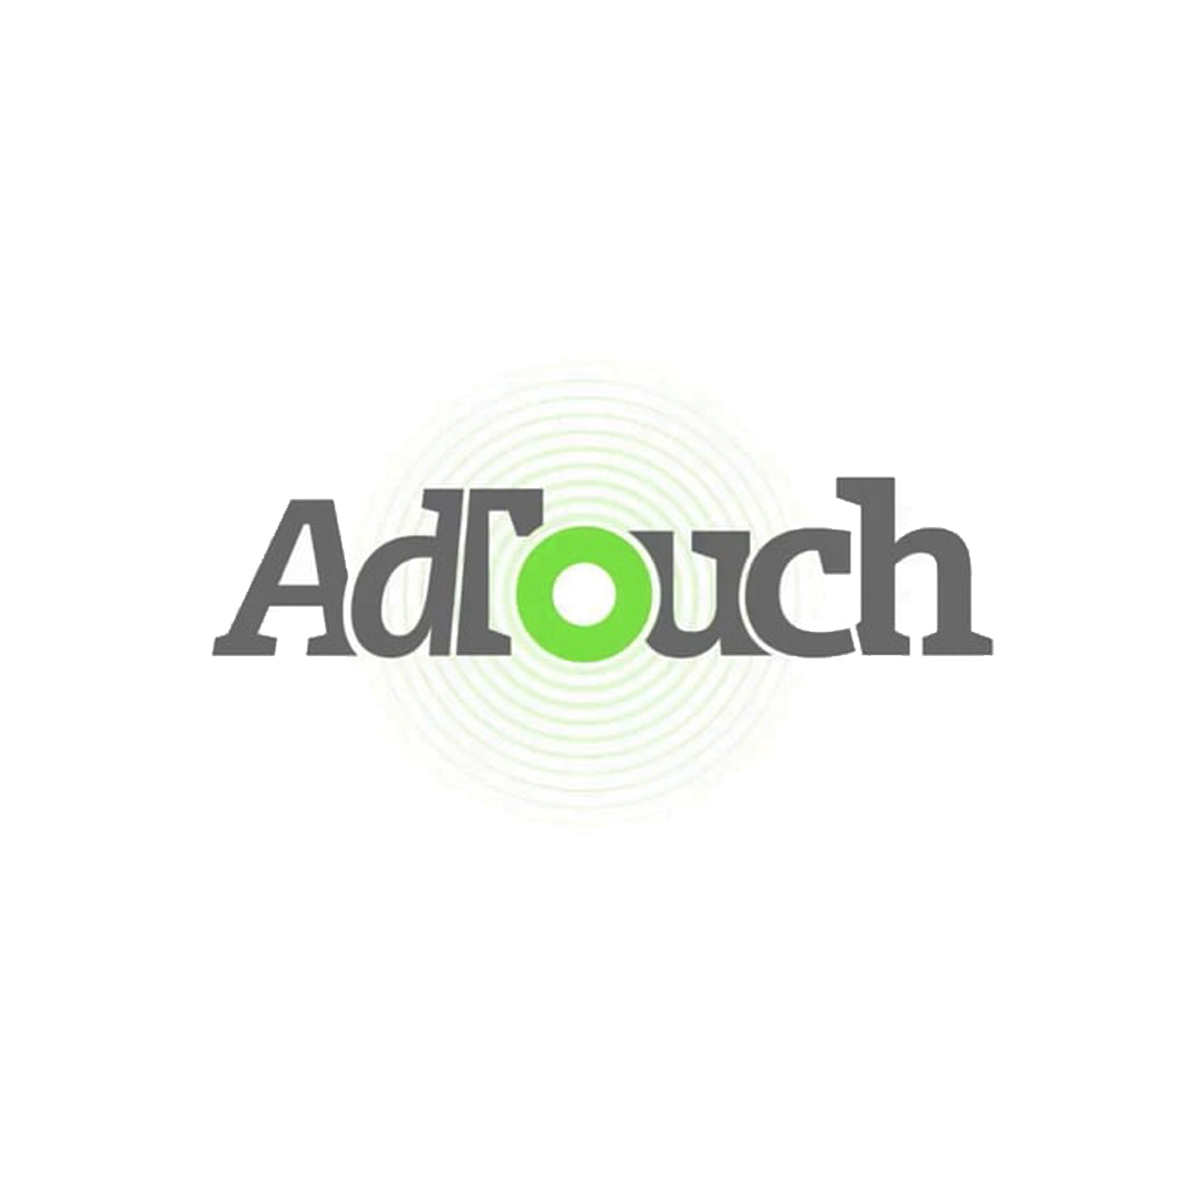 adtouch logo